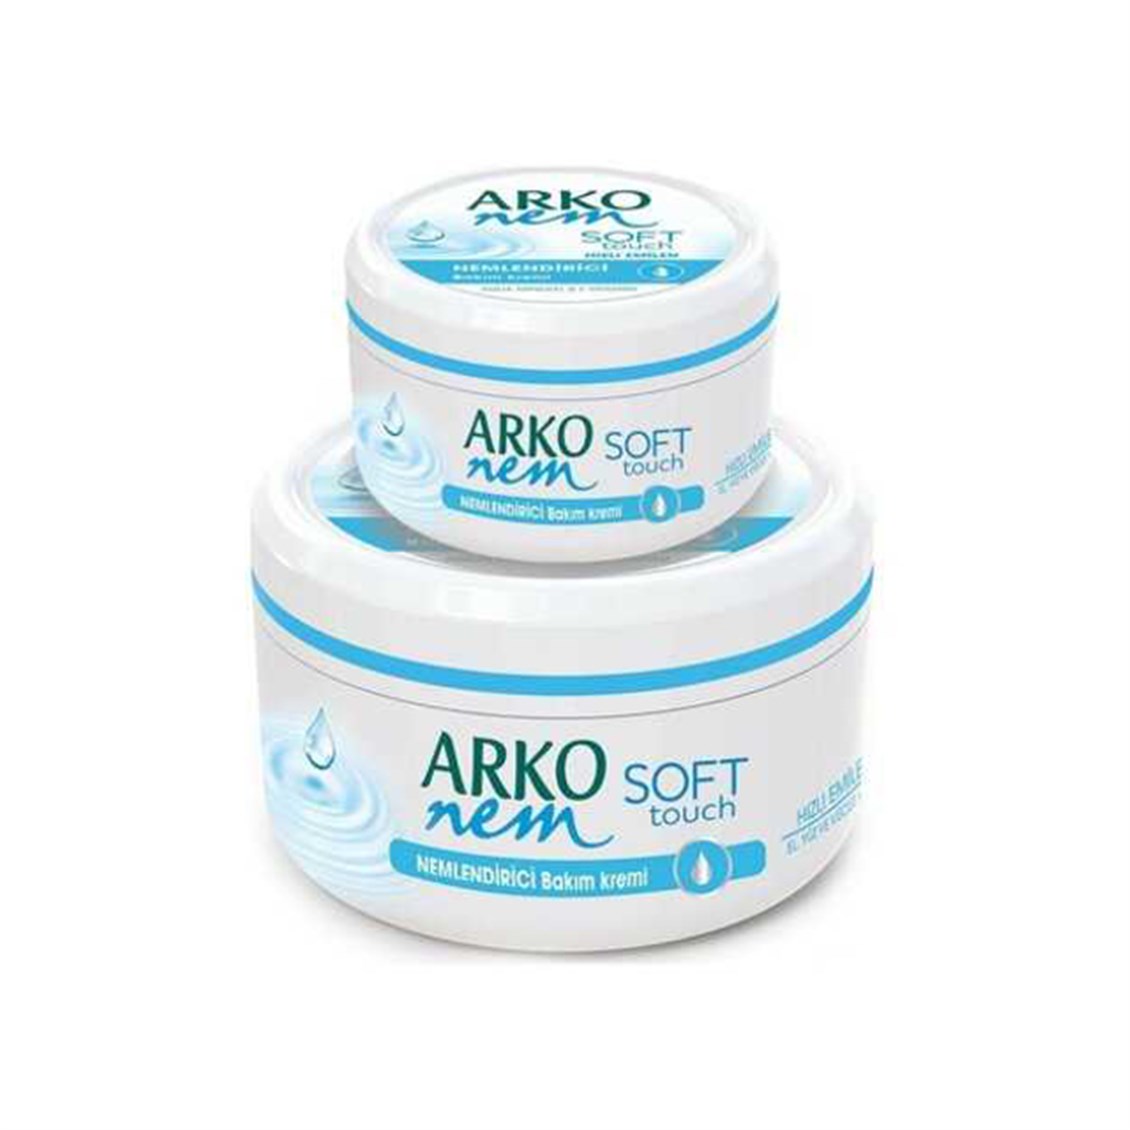 Arko Nem Krem Soft Touch 300ml+100ml - Onur Market